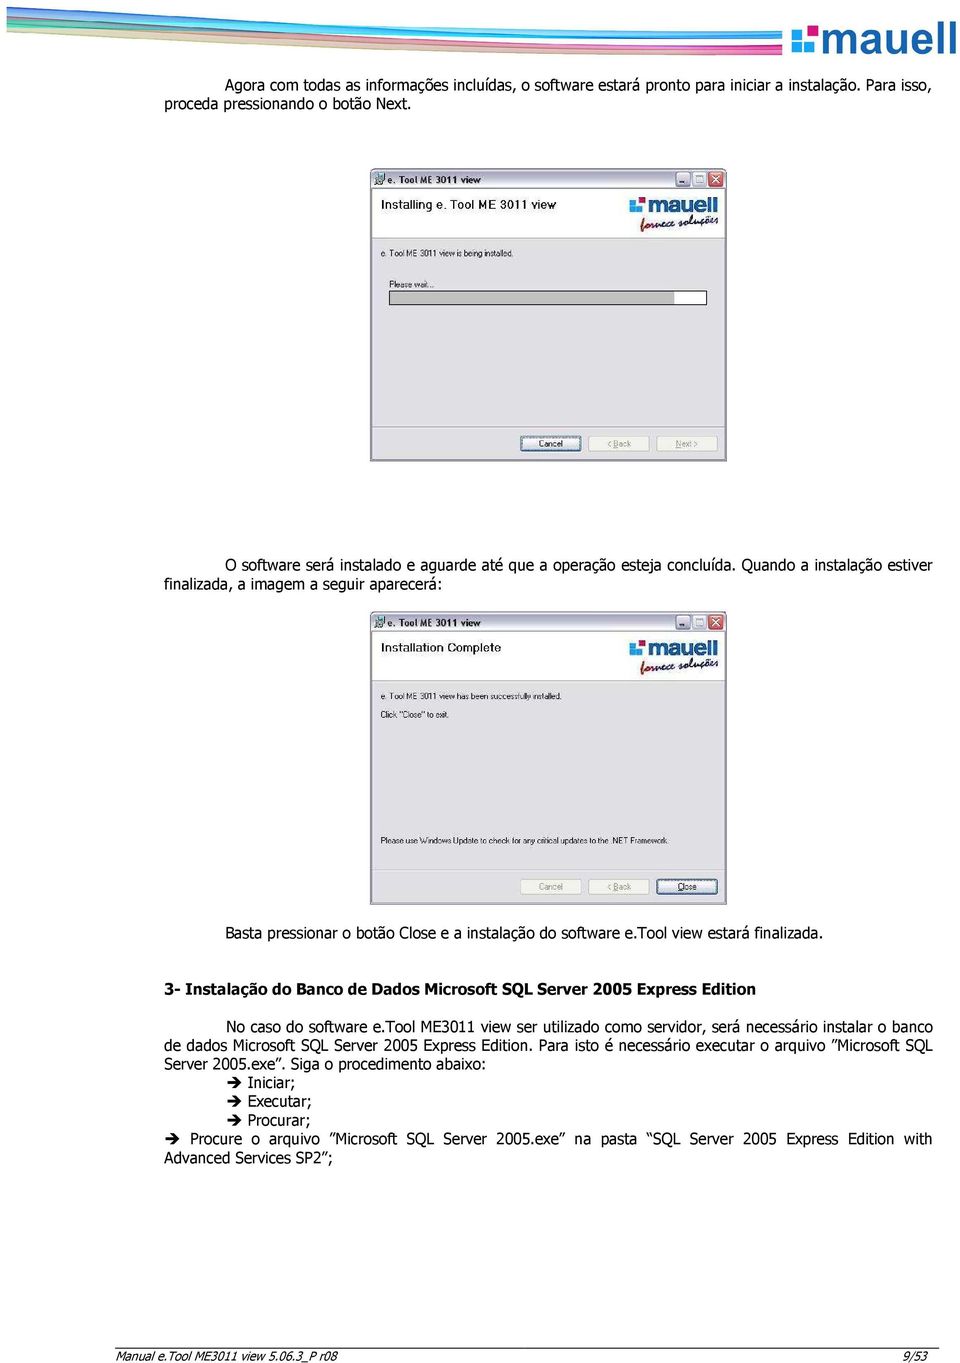 3- Instalaçã d Banc de Dads Micrsft SQL Server 2005 Express Editin N cas d sftware e.